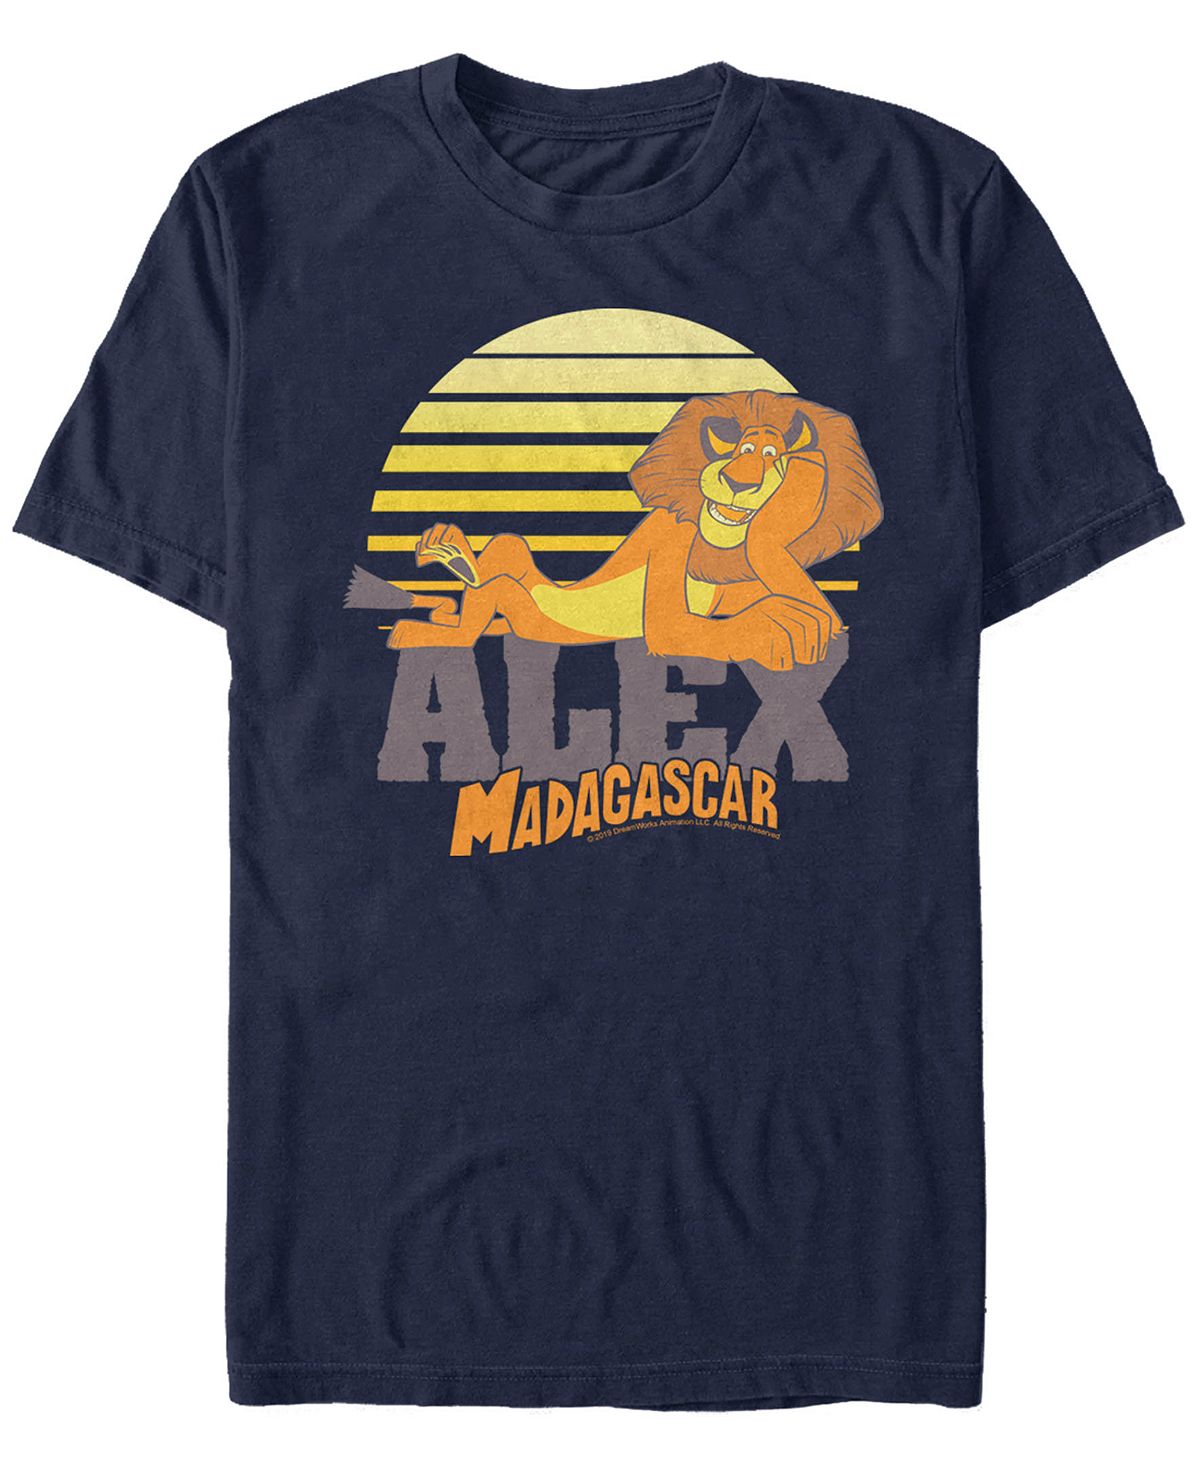 Мужская футболка alex с коротким рукавом madagascar Fifth Sun, синий мужская футболка с коротким рукавом monopoly hustle hard fifth sun синий